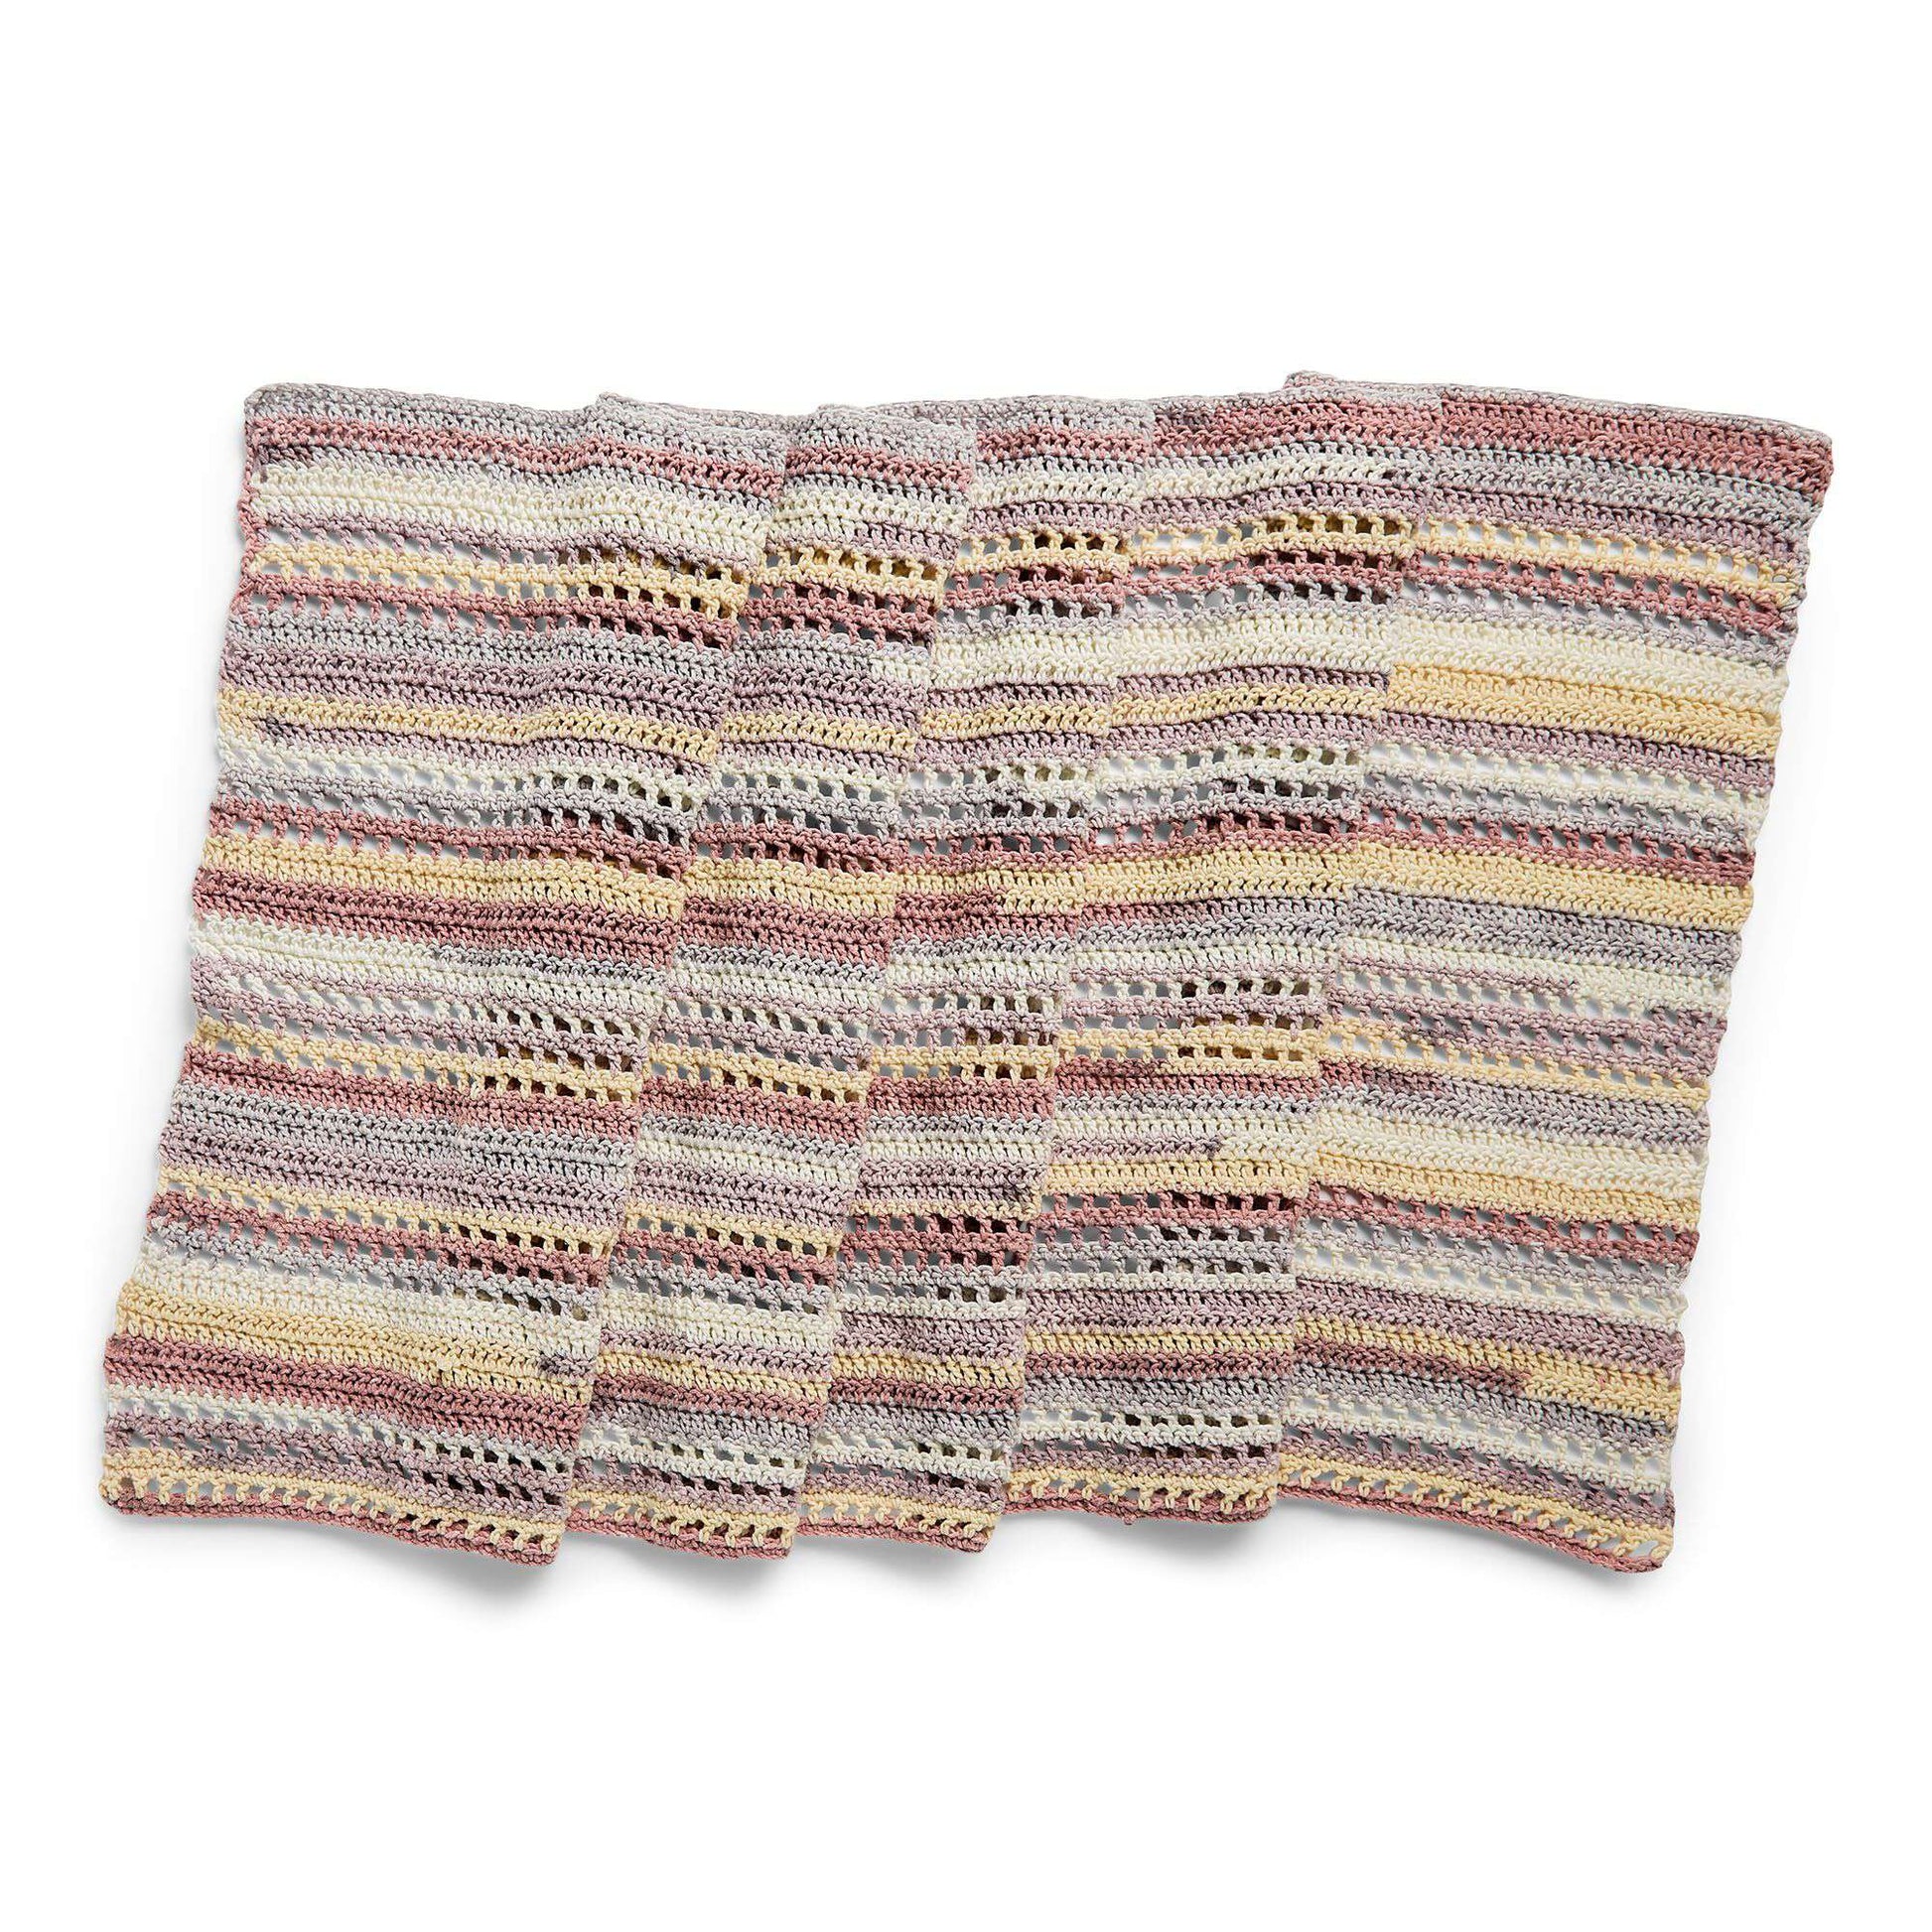 Free Caron Mesh Bands Crochet Shawl Pattern